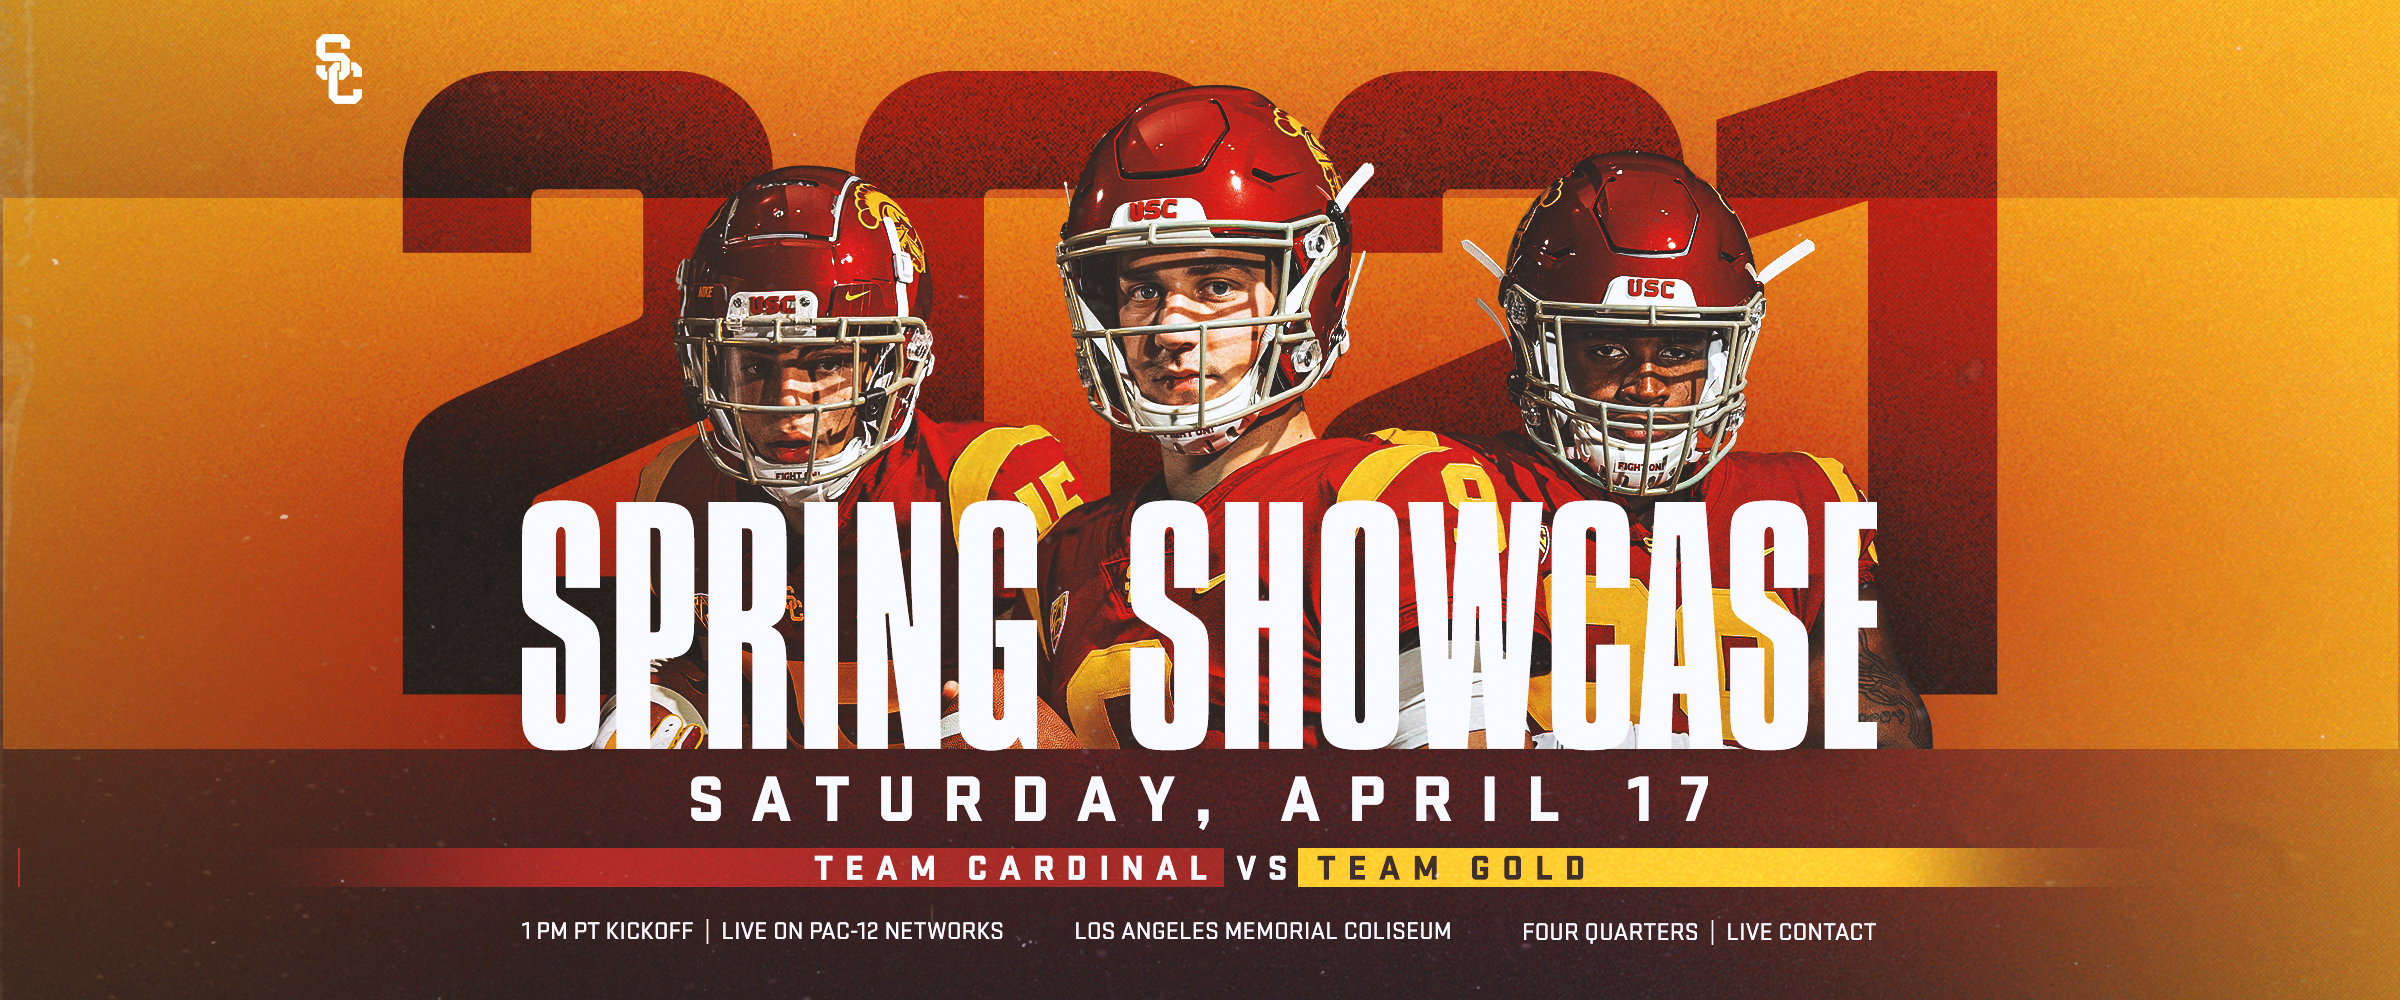 USC Spring Showcase